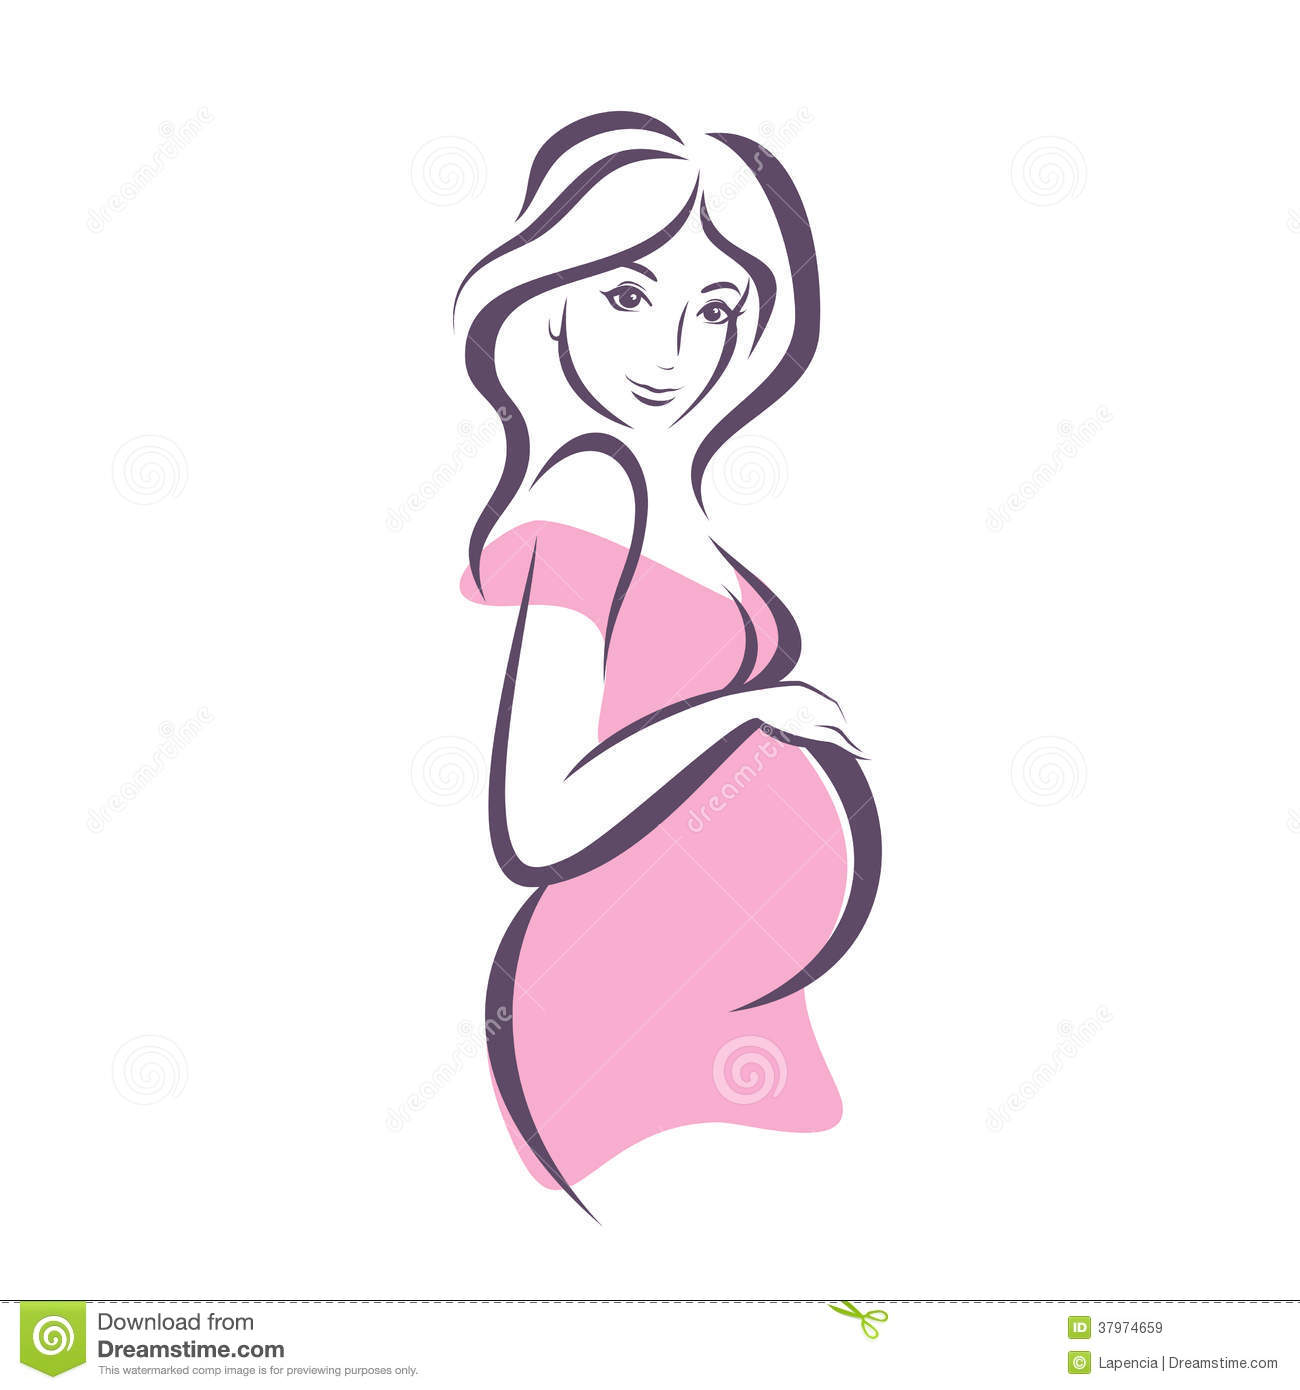 Pregnant girl4